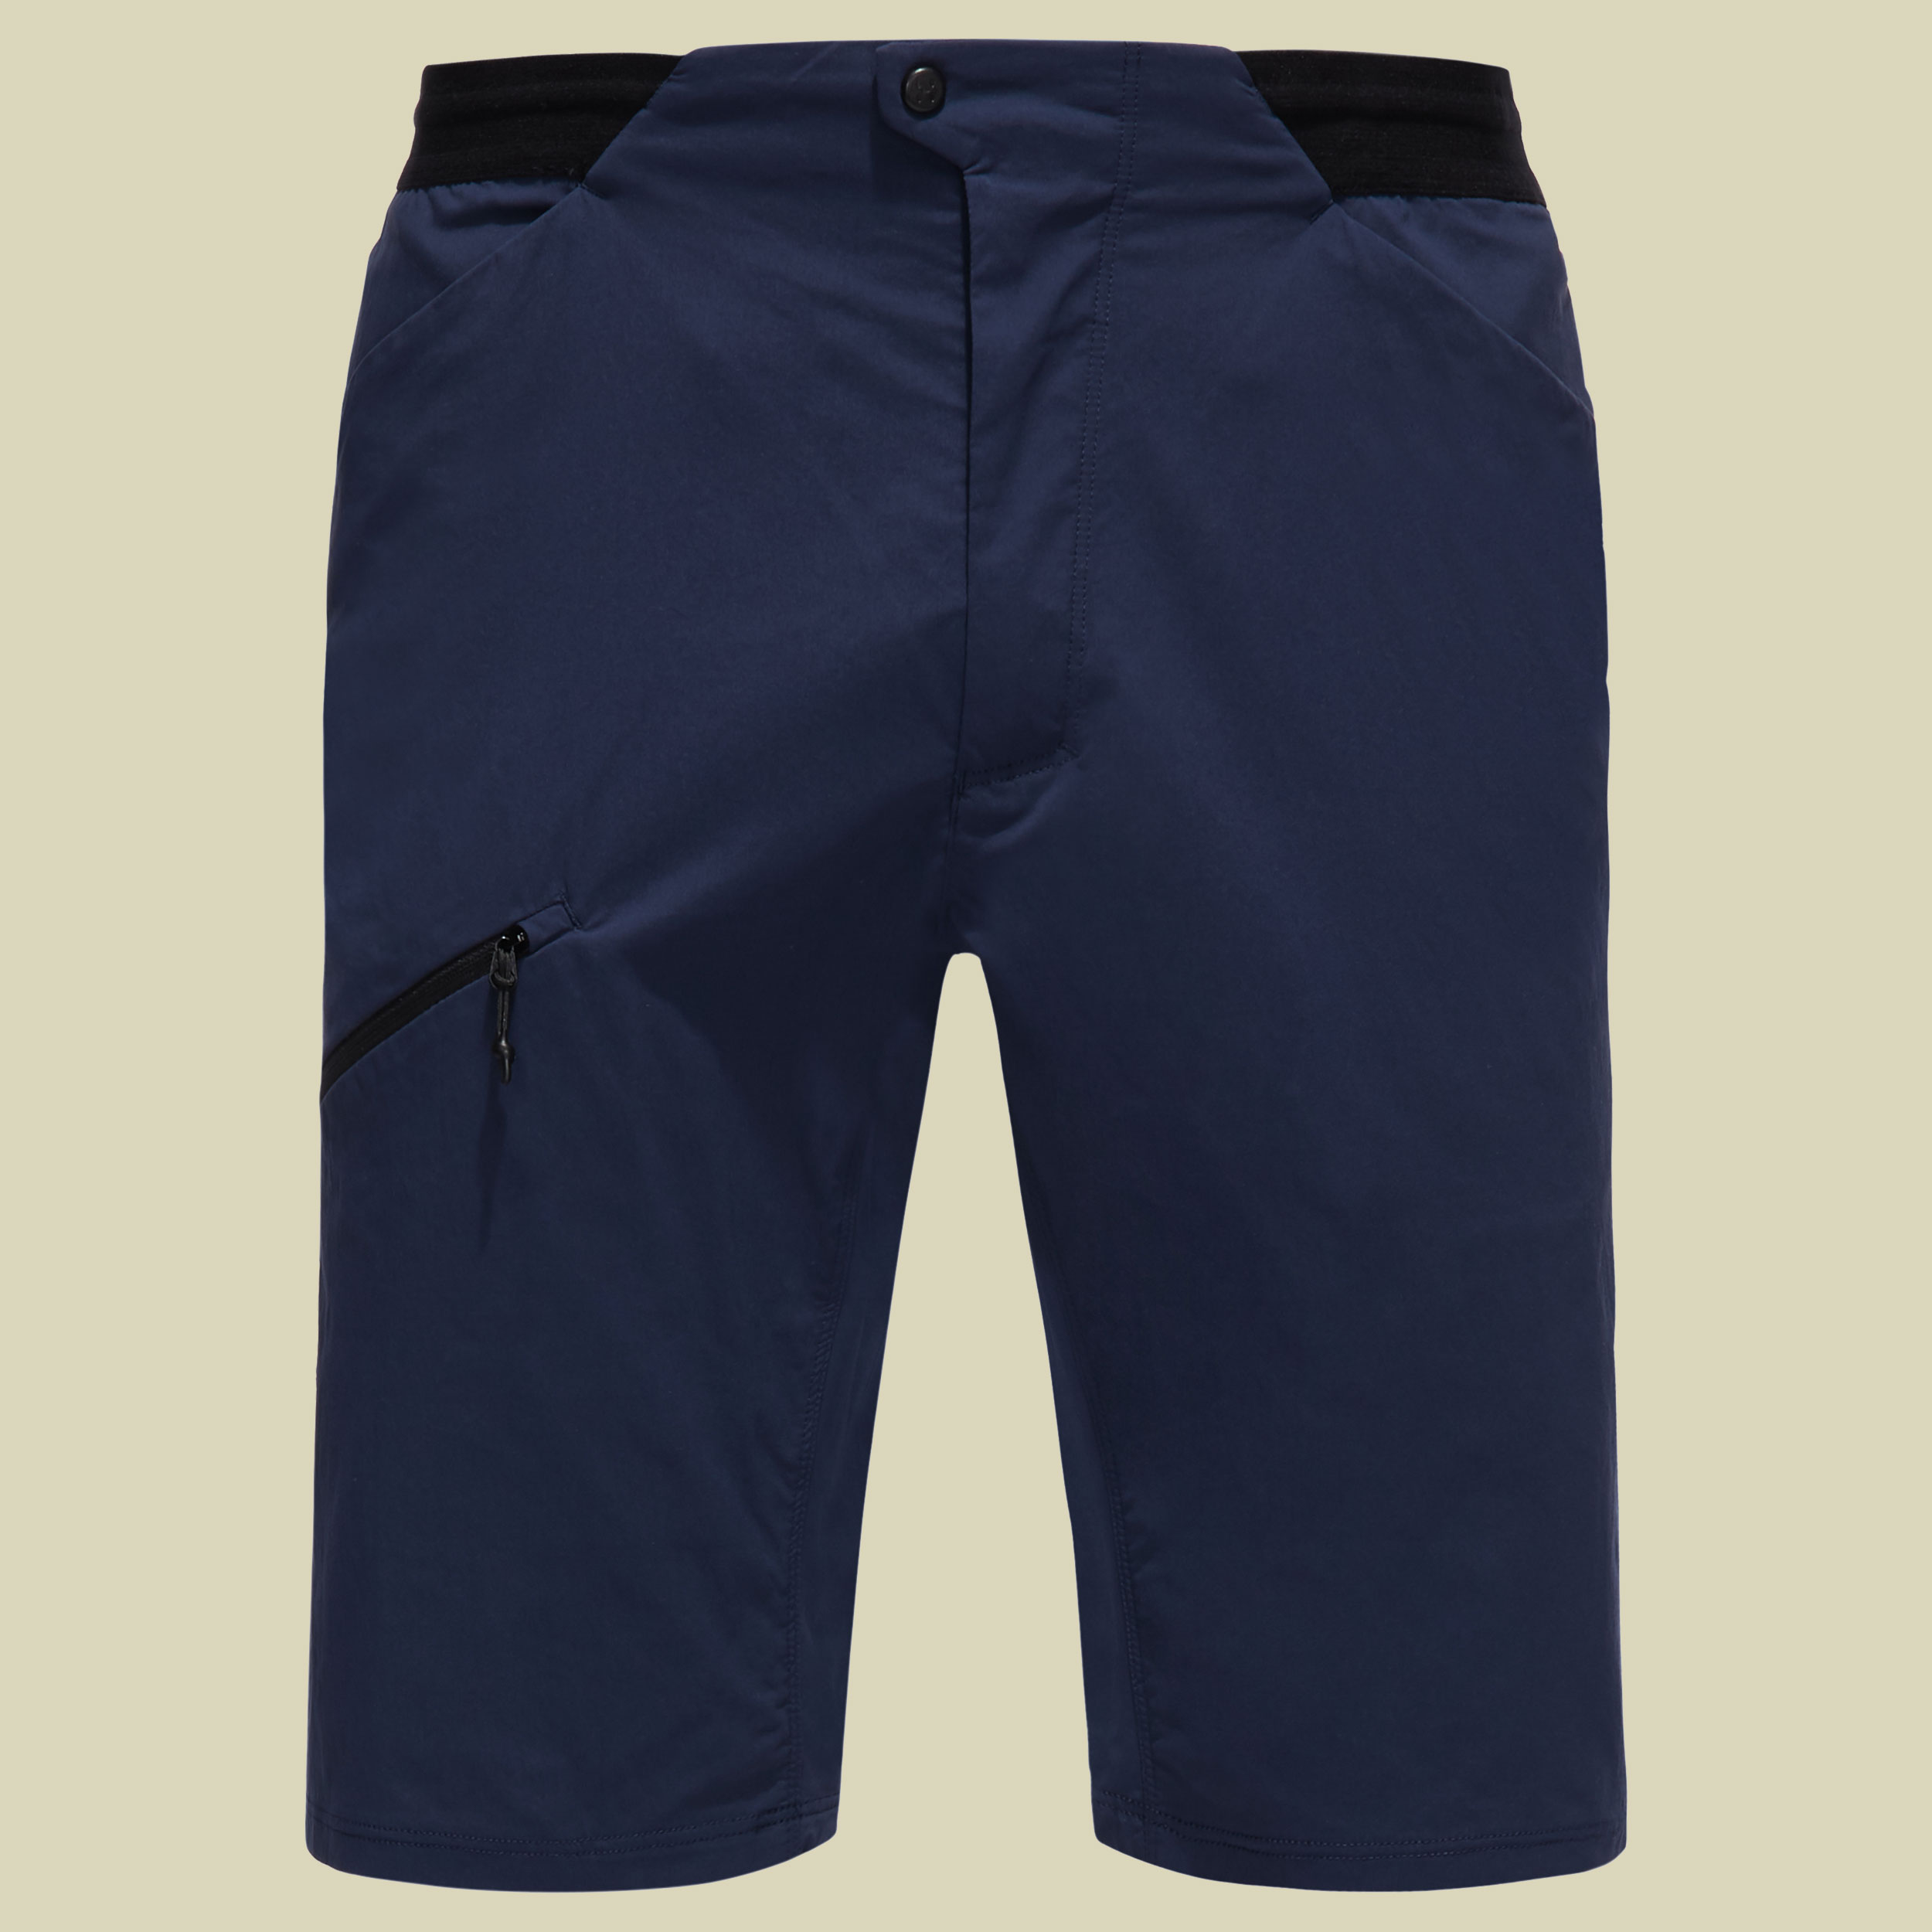 L.I.M. Fuse Shorts Men 48 blau - tarn blue